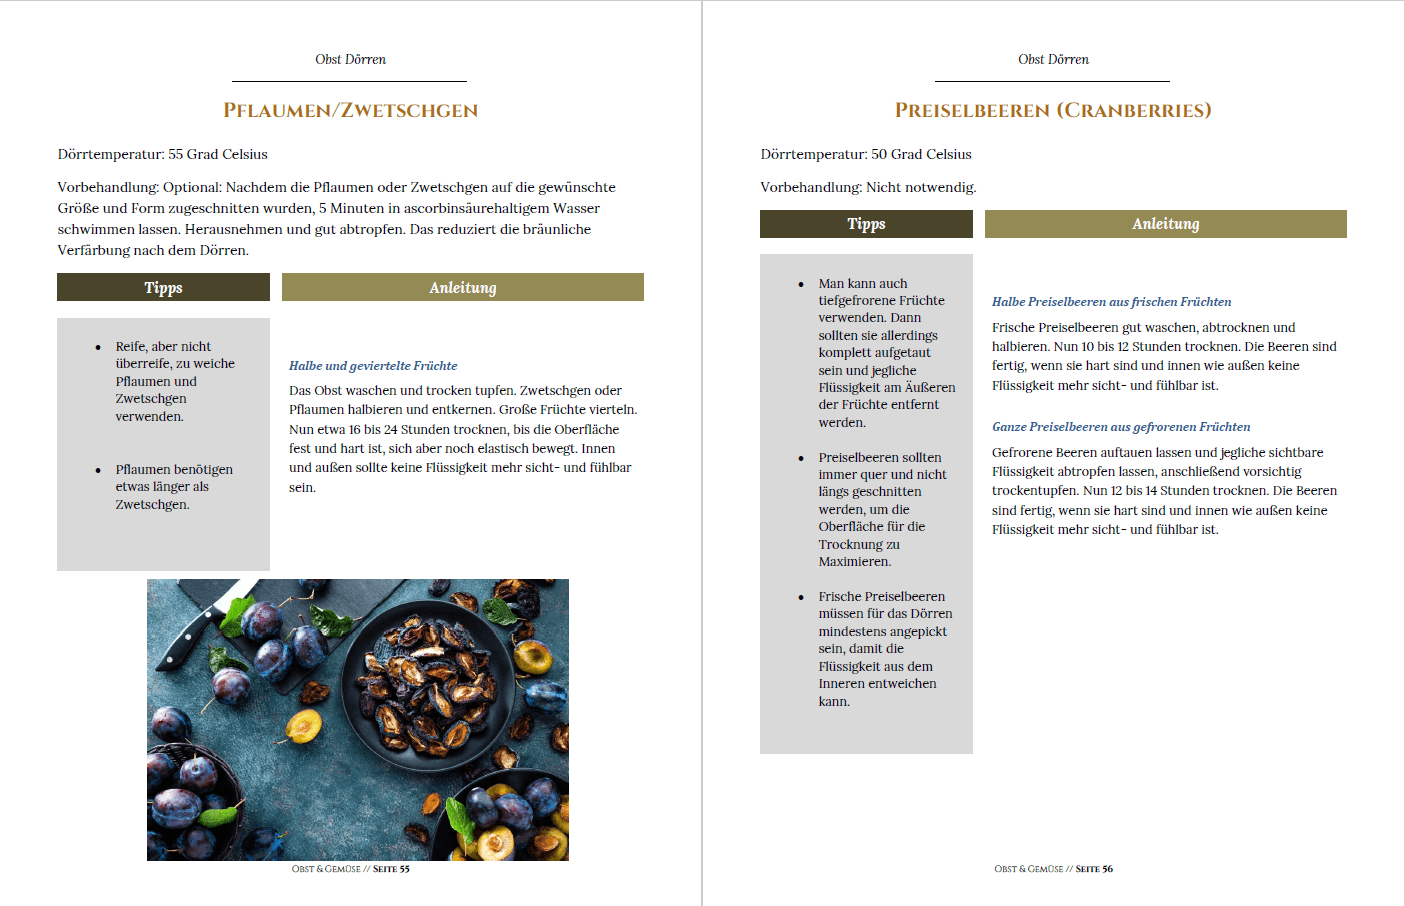 Obst & Gemüse trocknen: Das Lexikon [E-Book]